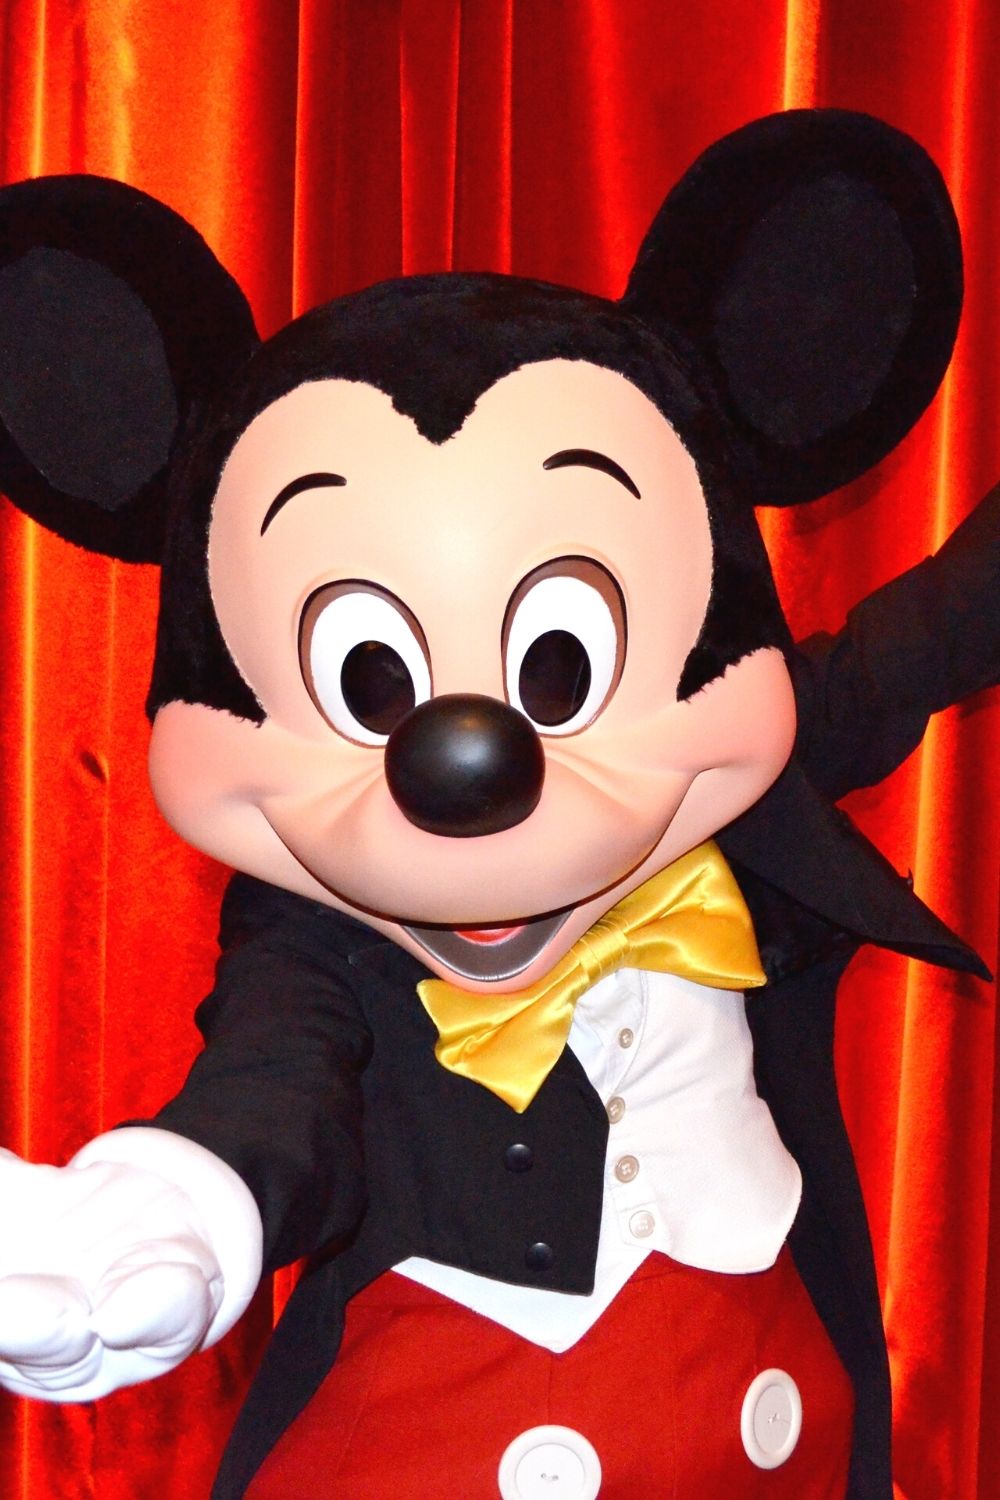 Mickey character during a meet and greet at DIsney World